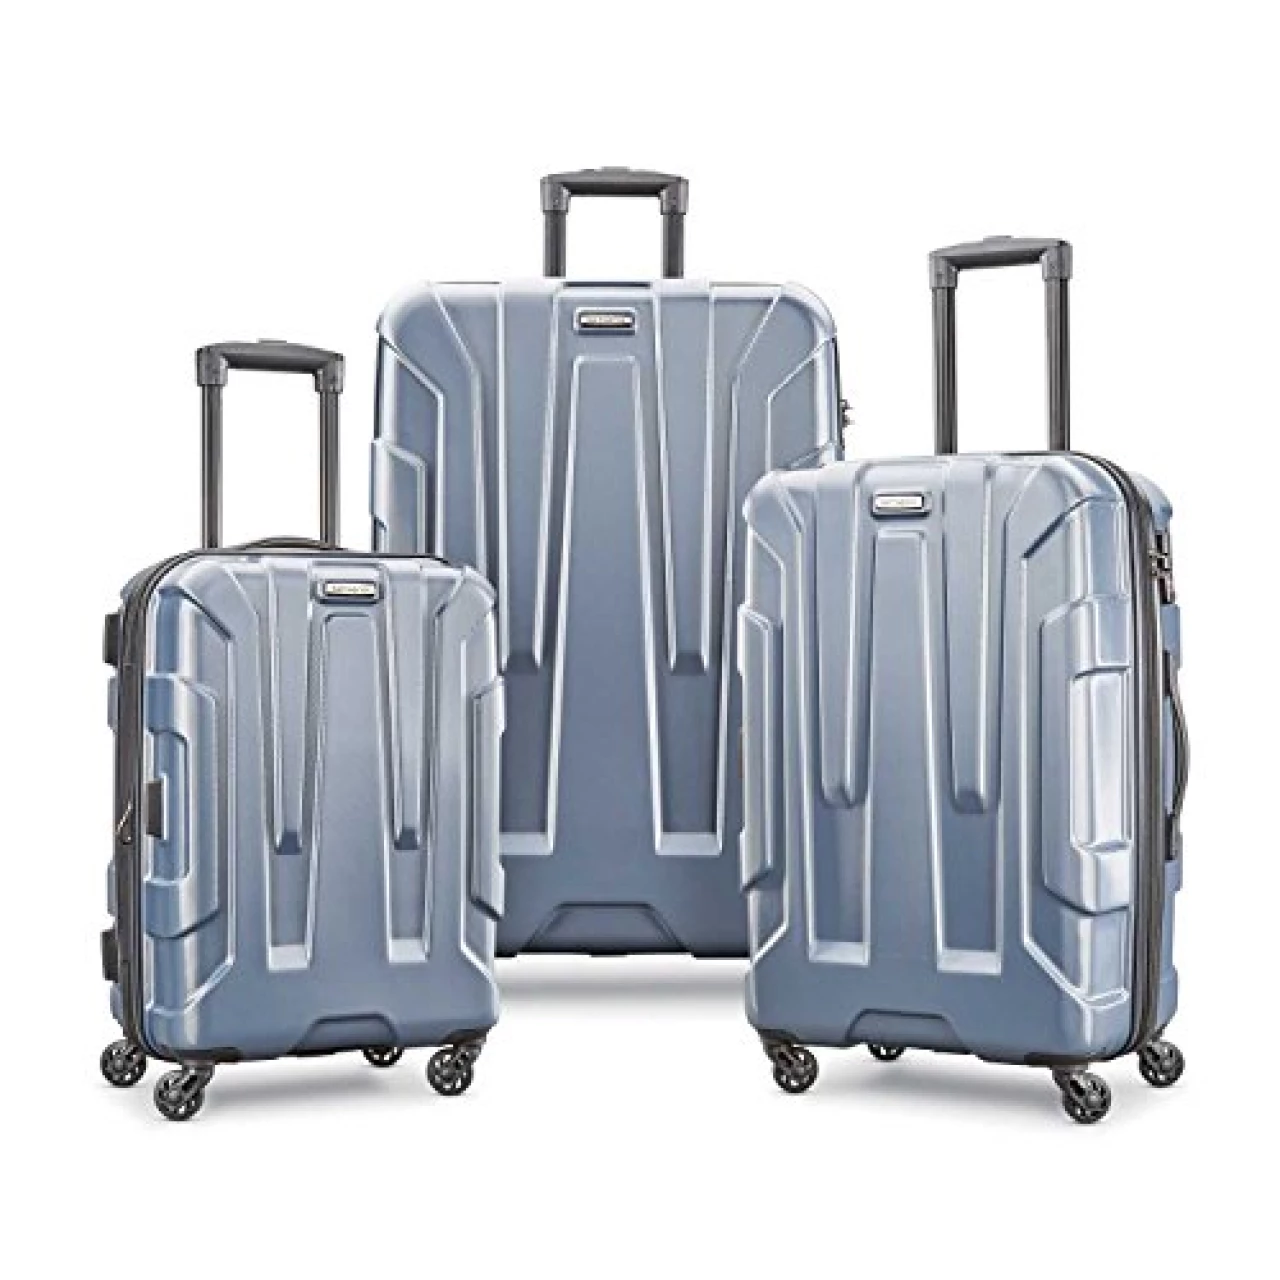 Samsonite Centric Hardside Luggage Set